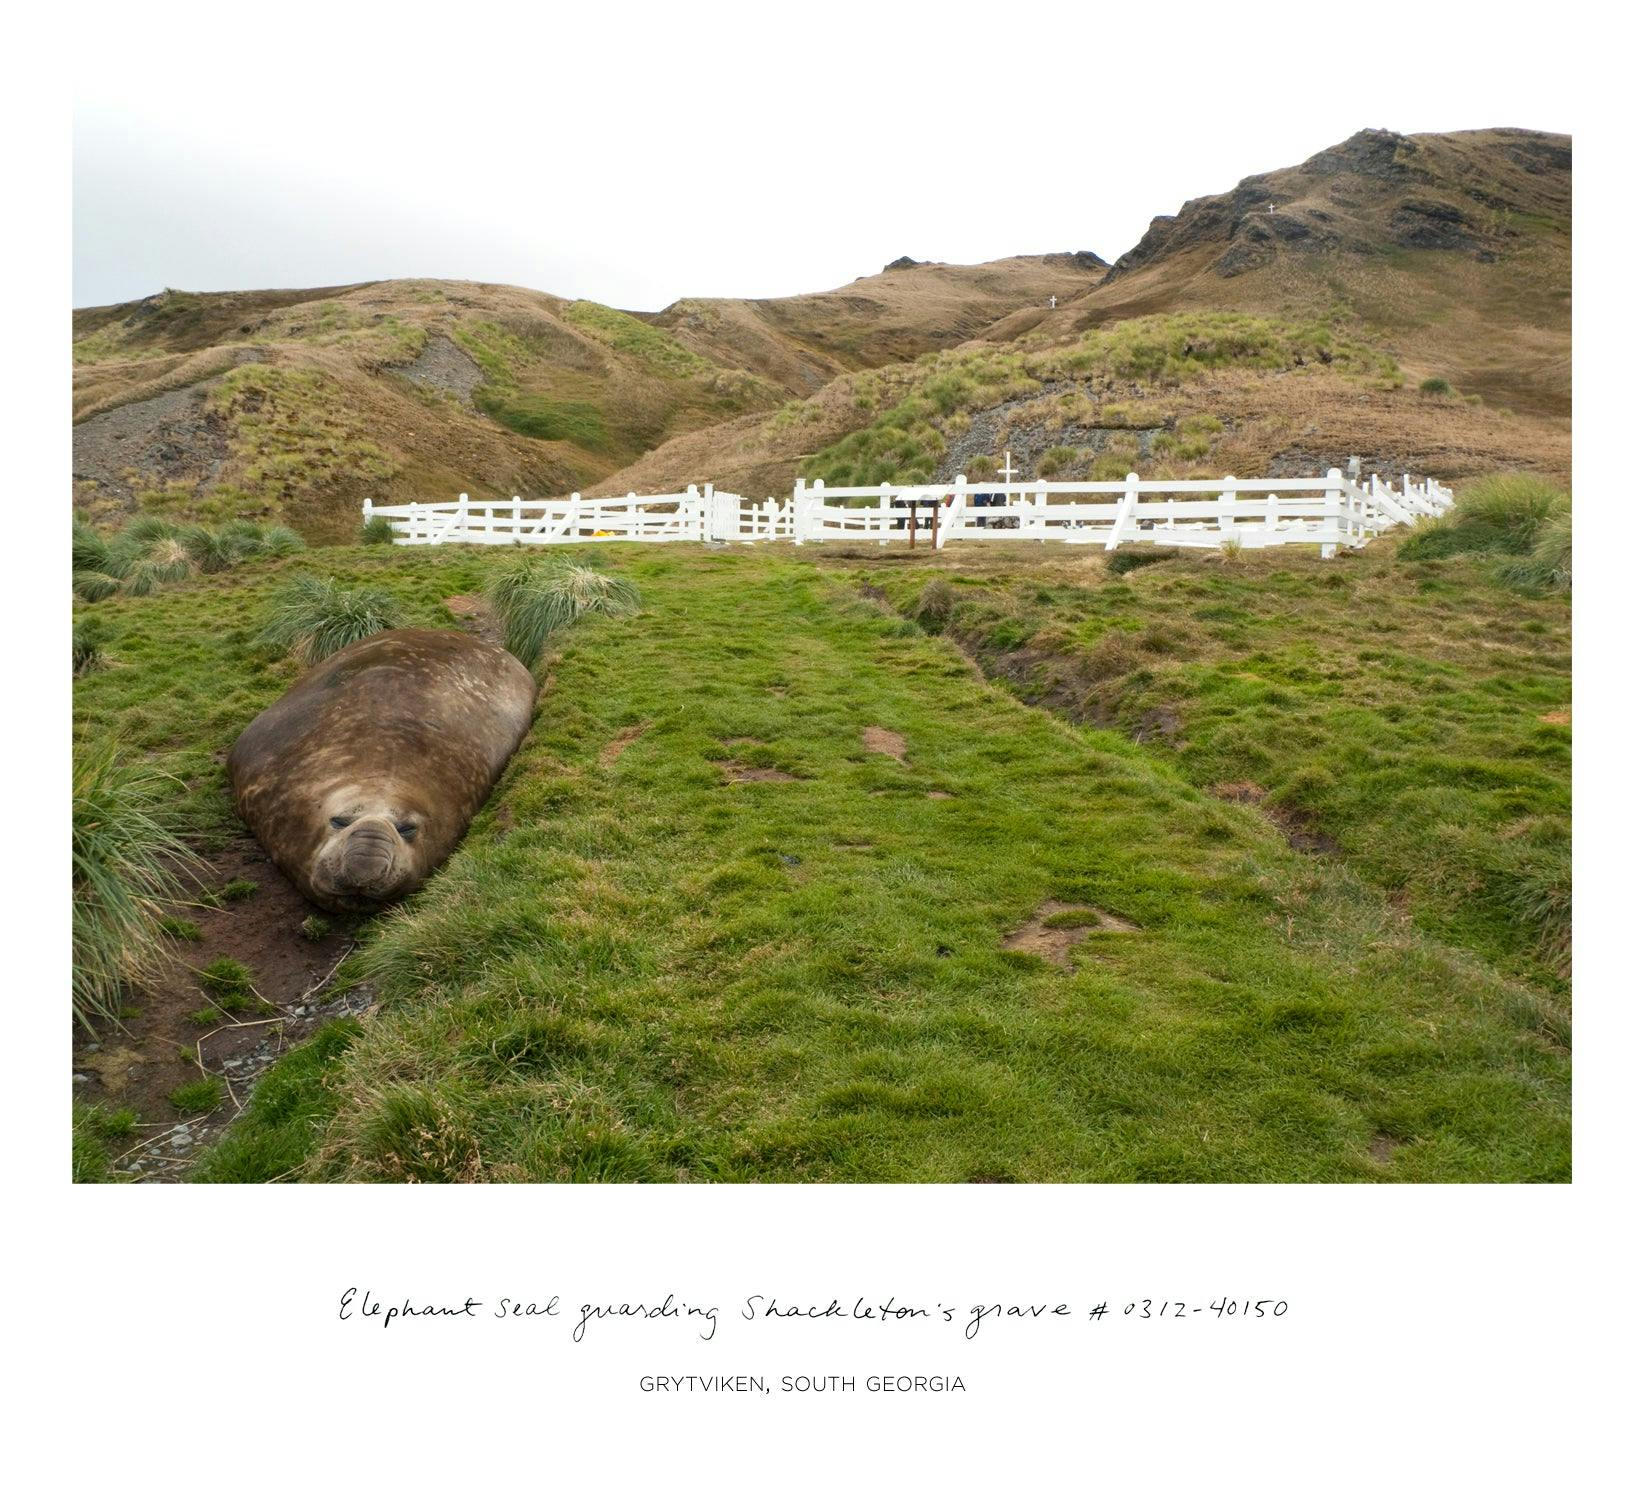 Photography by Rachel Sussman titled "Elephant seal guarding Shackleton's grave #0312-40150 (Grytviken, South Georgia".